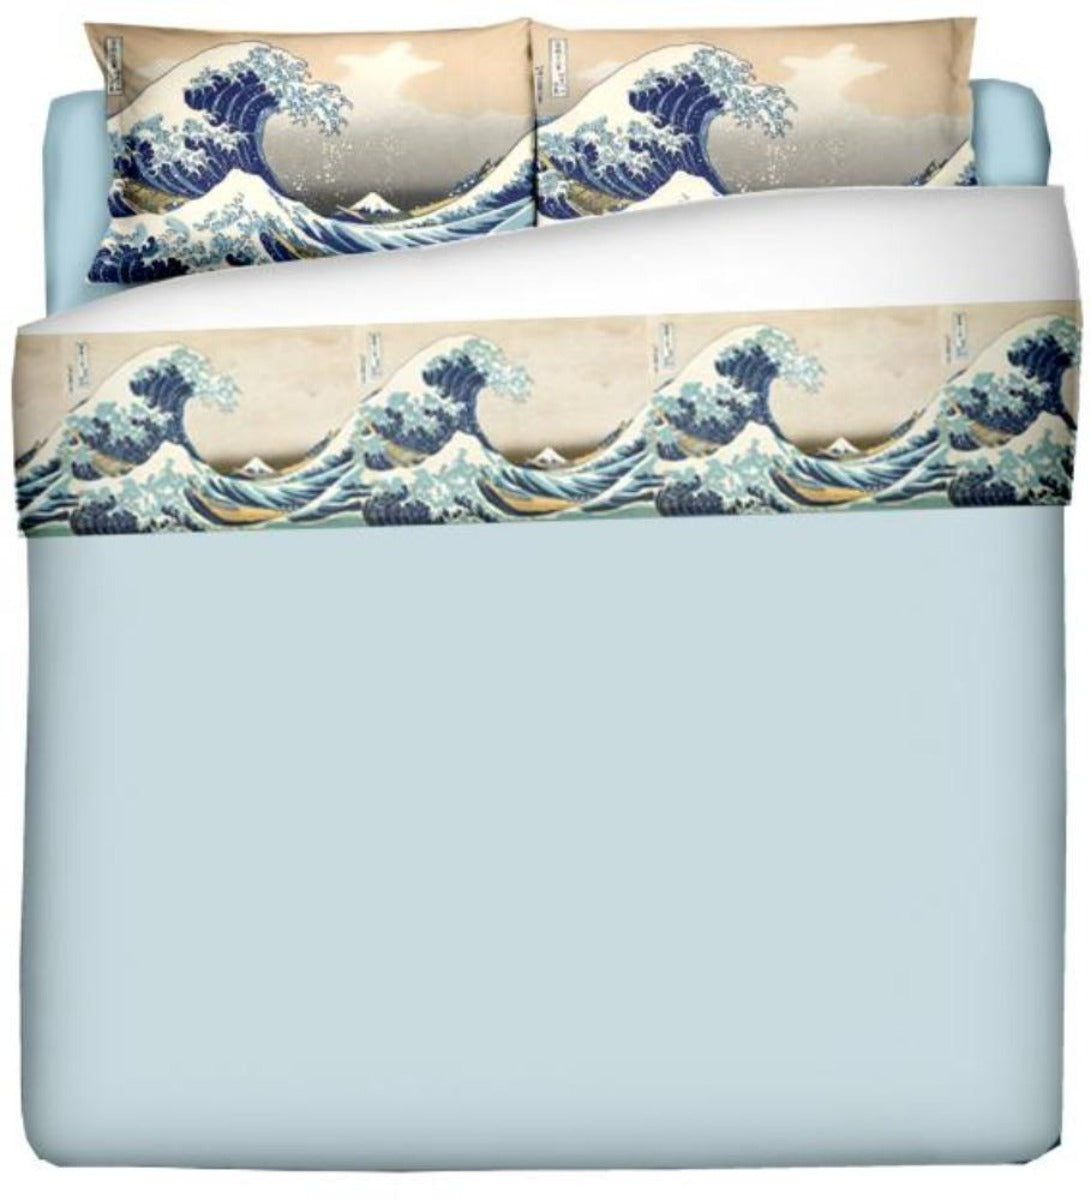 Sheets with pillowcases - Hokusai-The great wave of Kanagawa